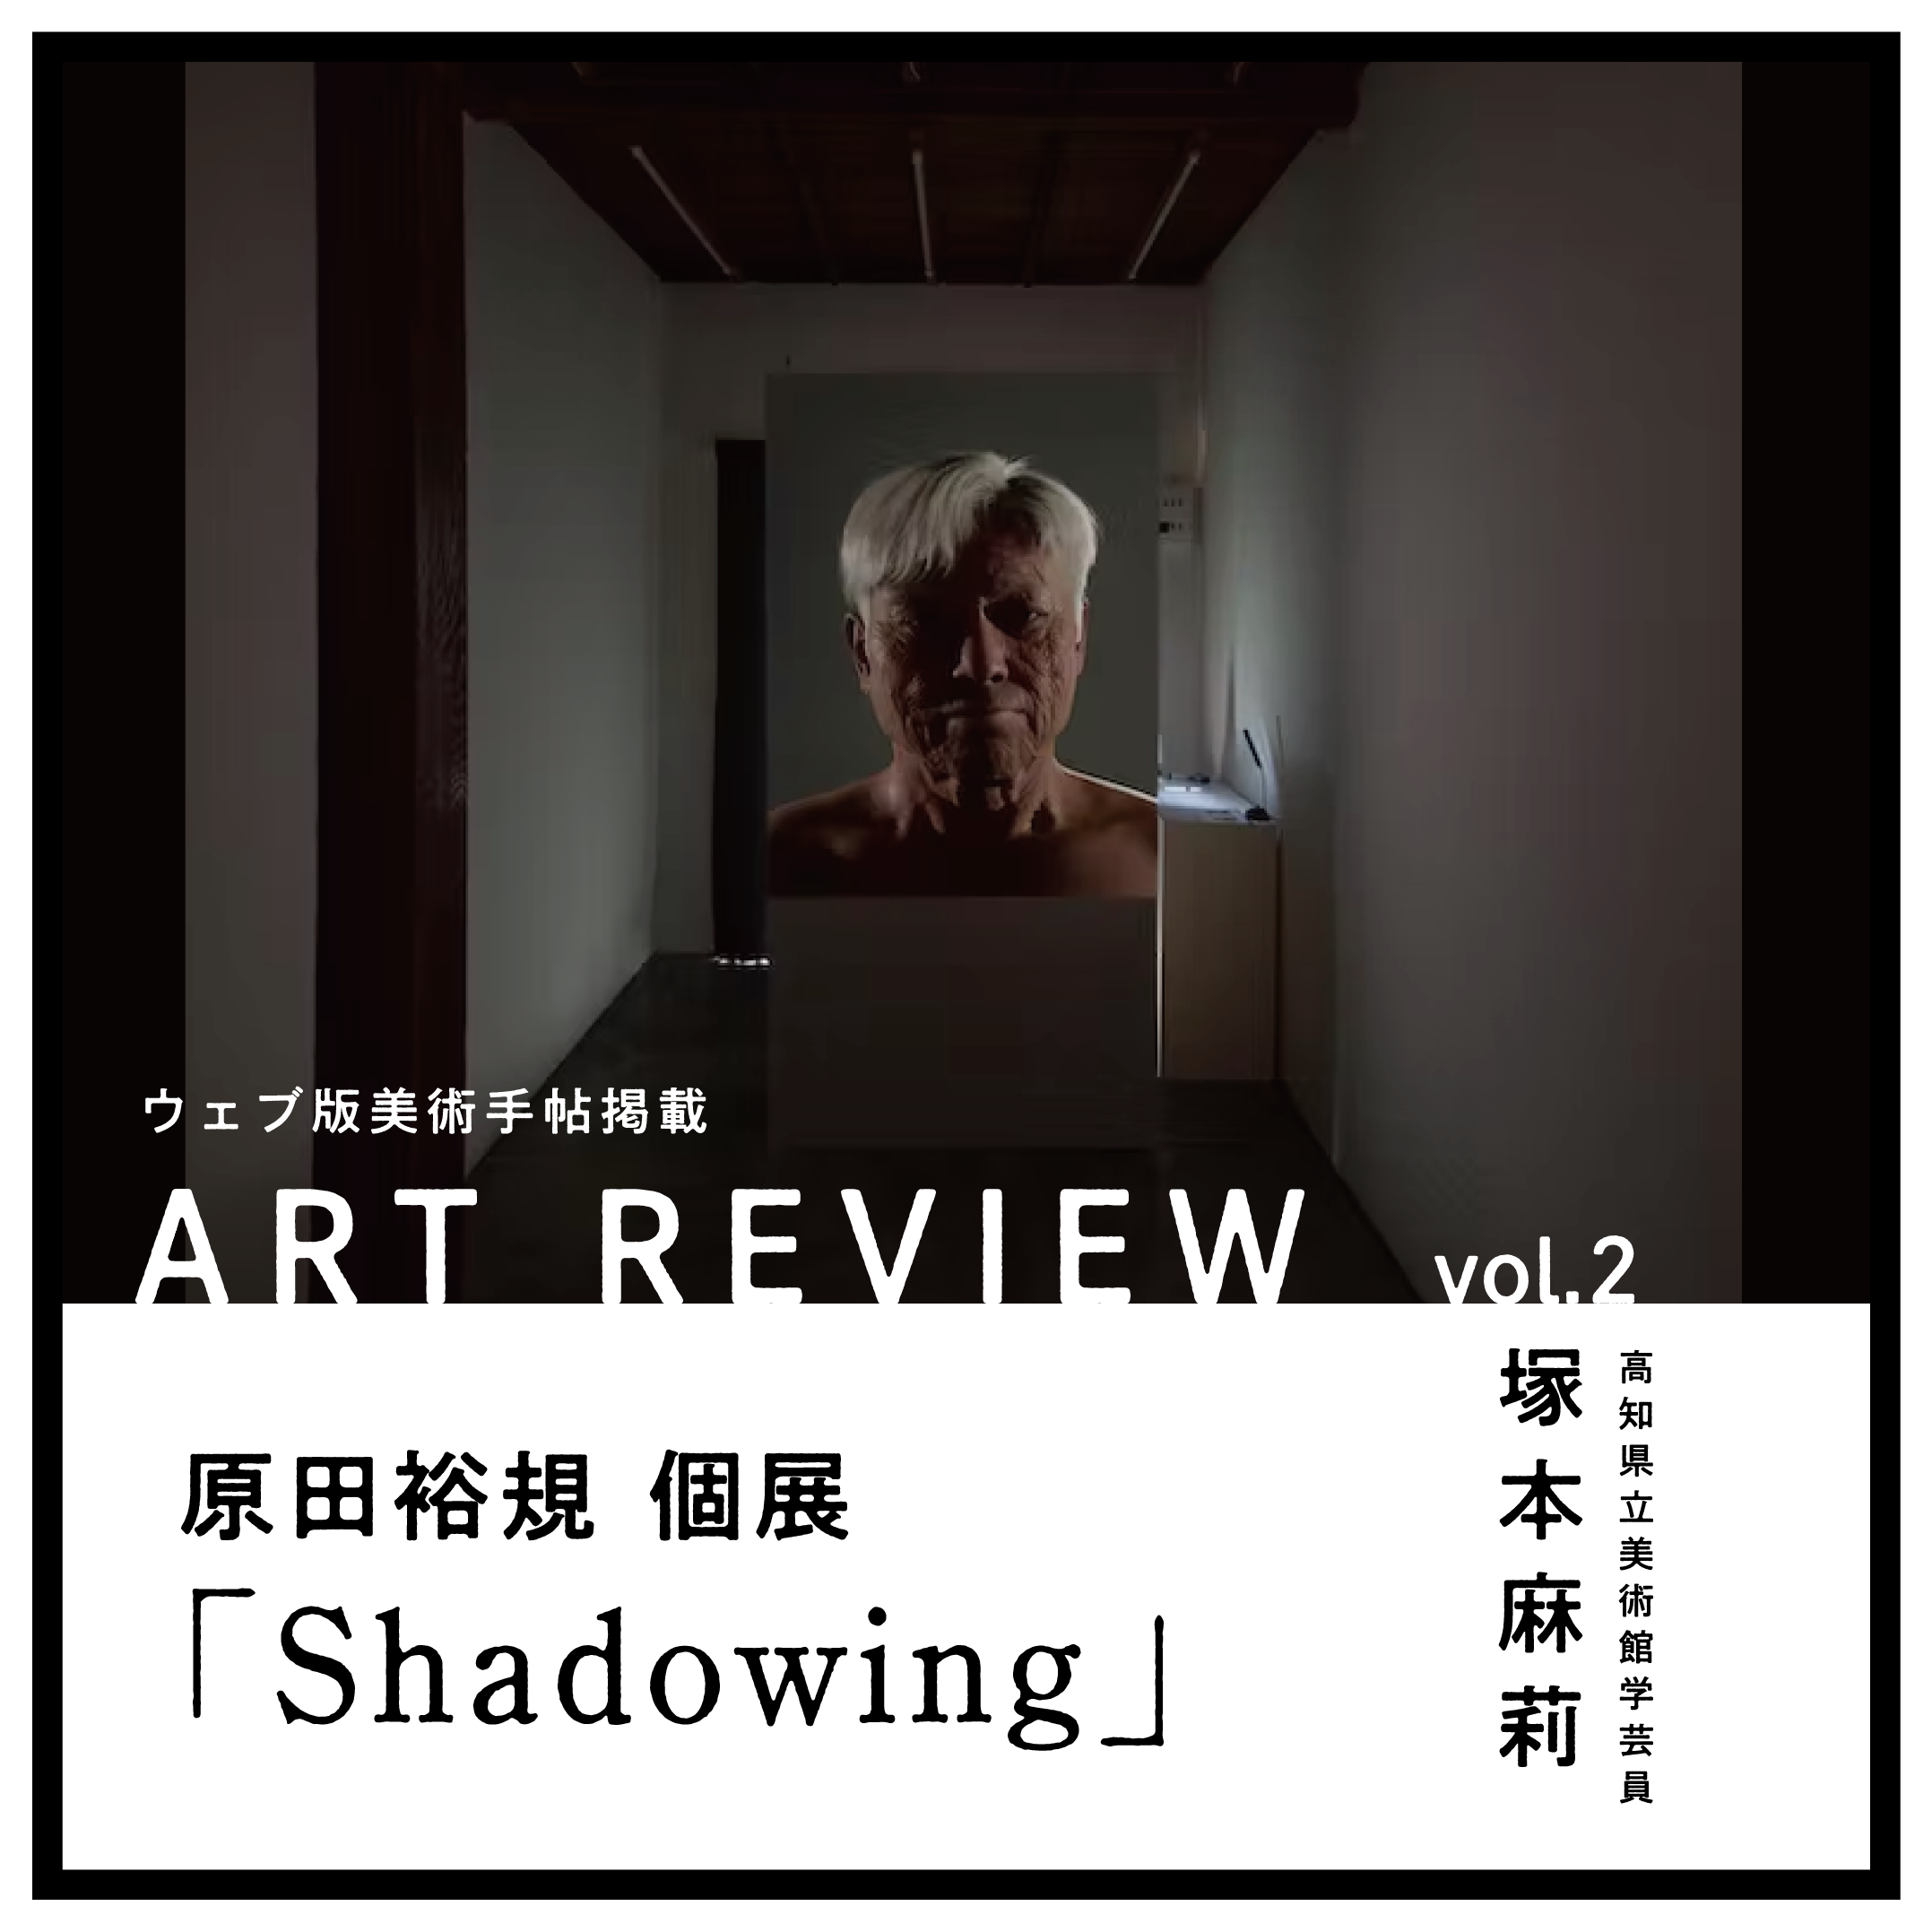 【ART REVIEW vol.1】オバケだから言えること。 塚本麻莉評「原田裕規個展 Shadowing」